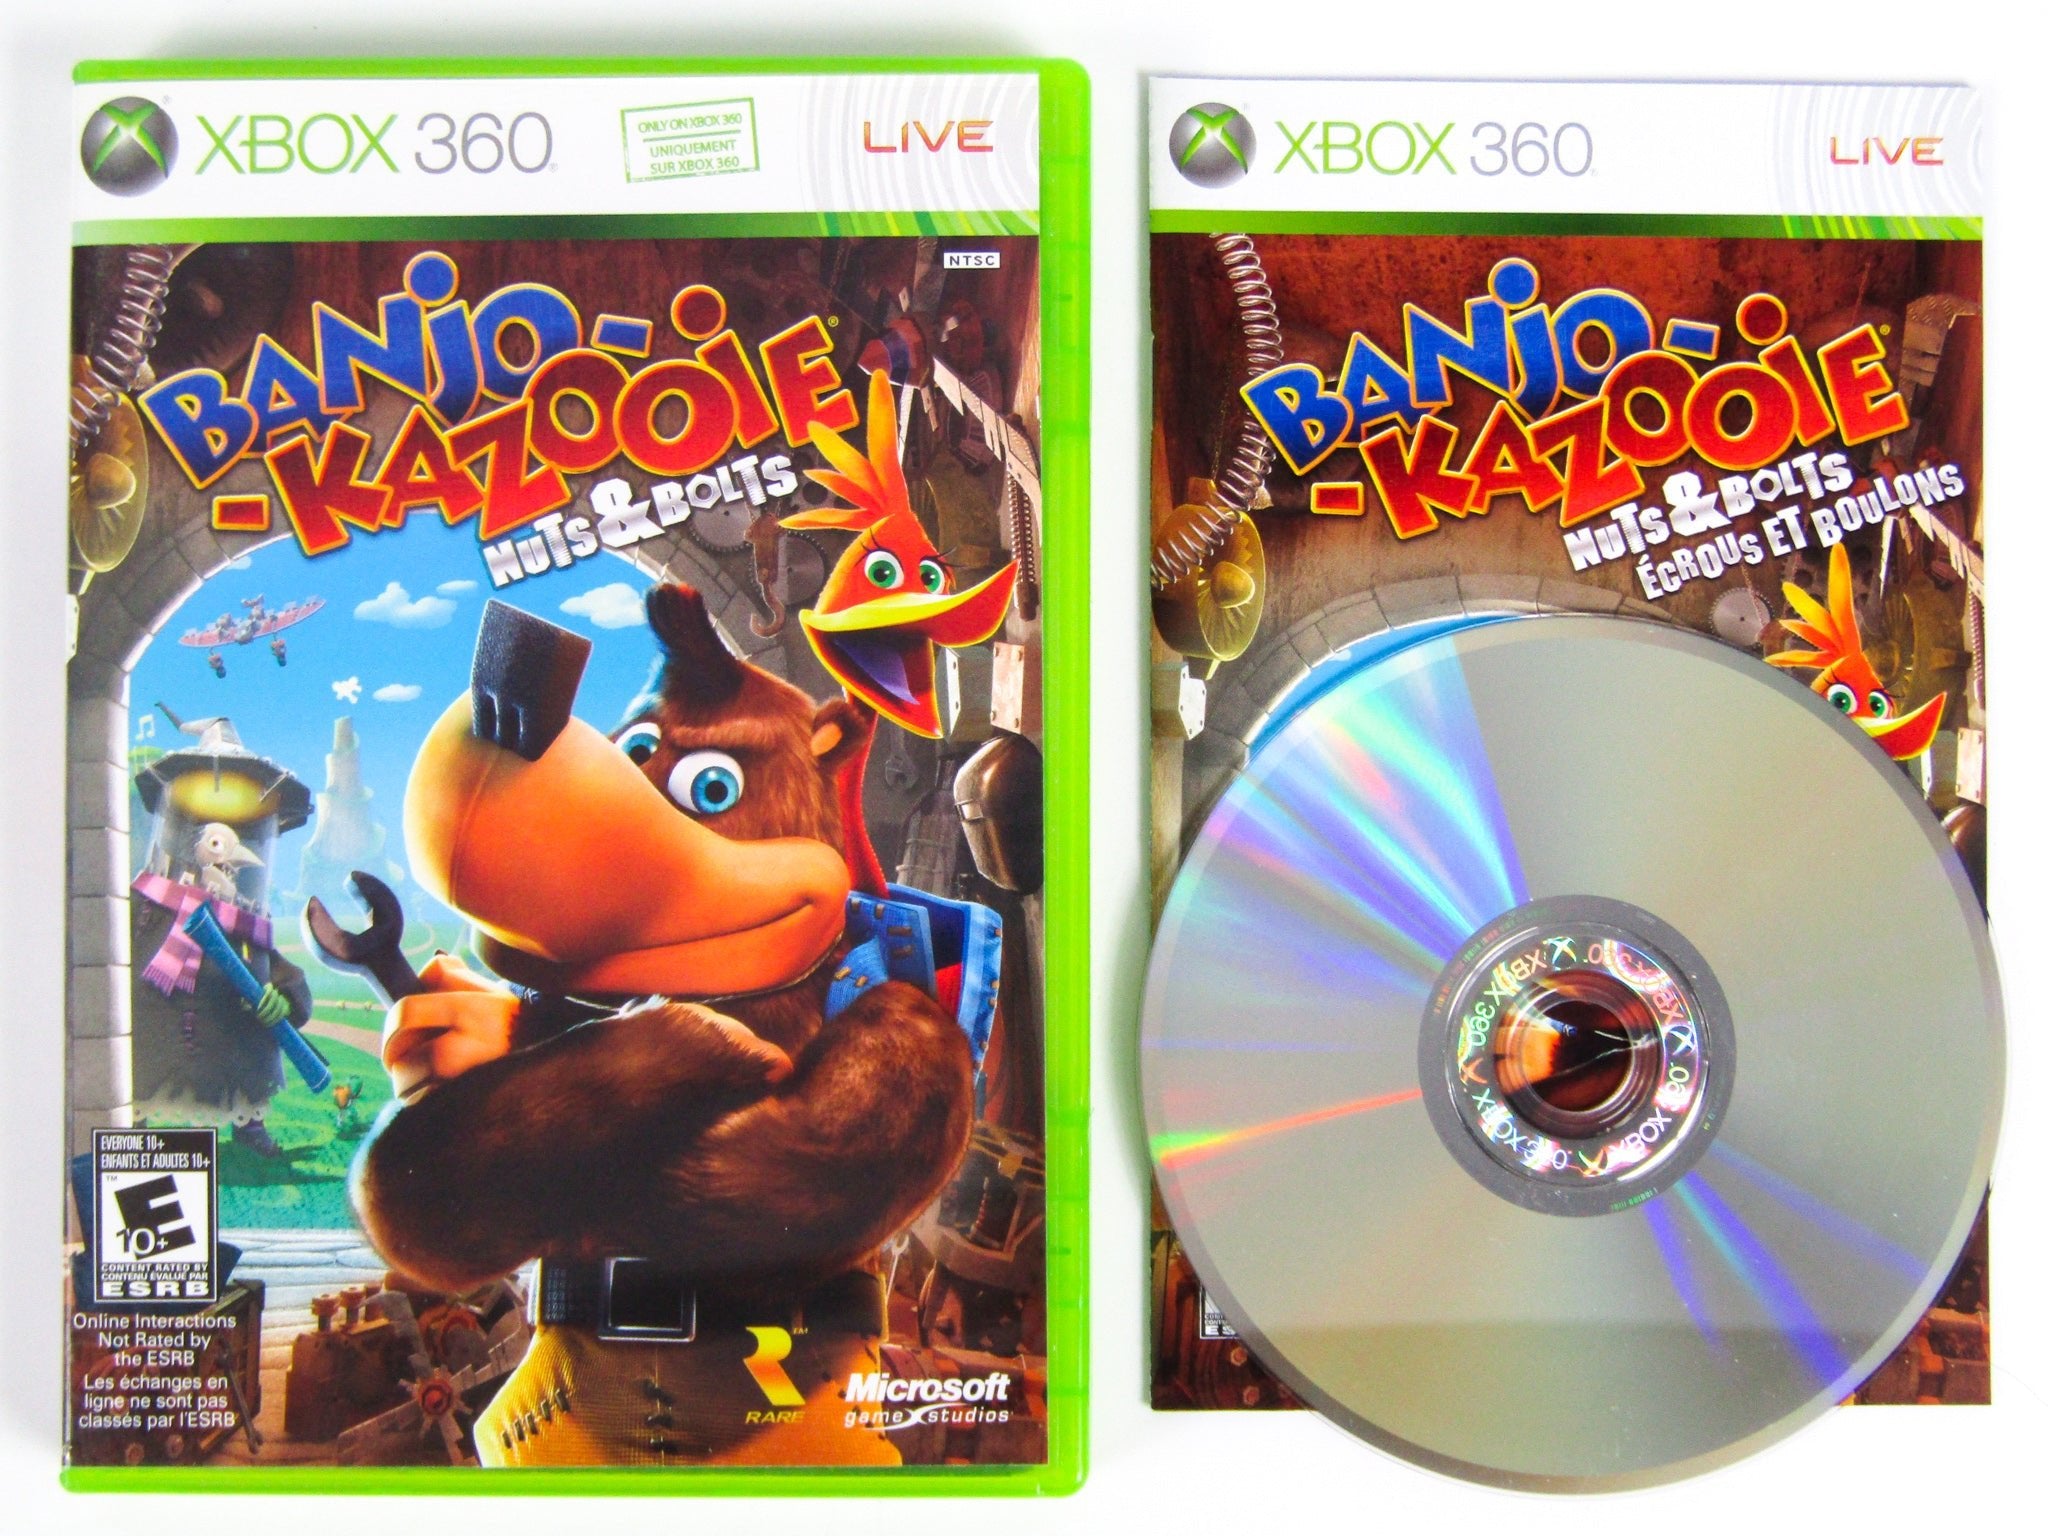 Banjo-Kazooie: Nuts & Bolts [BC] - Xbox 360